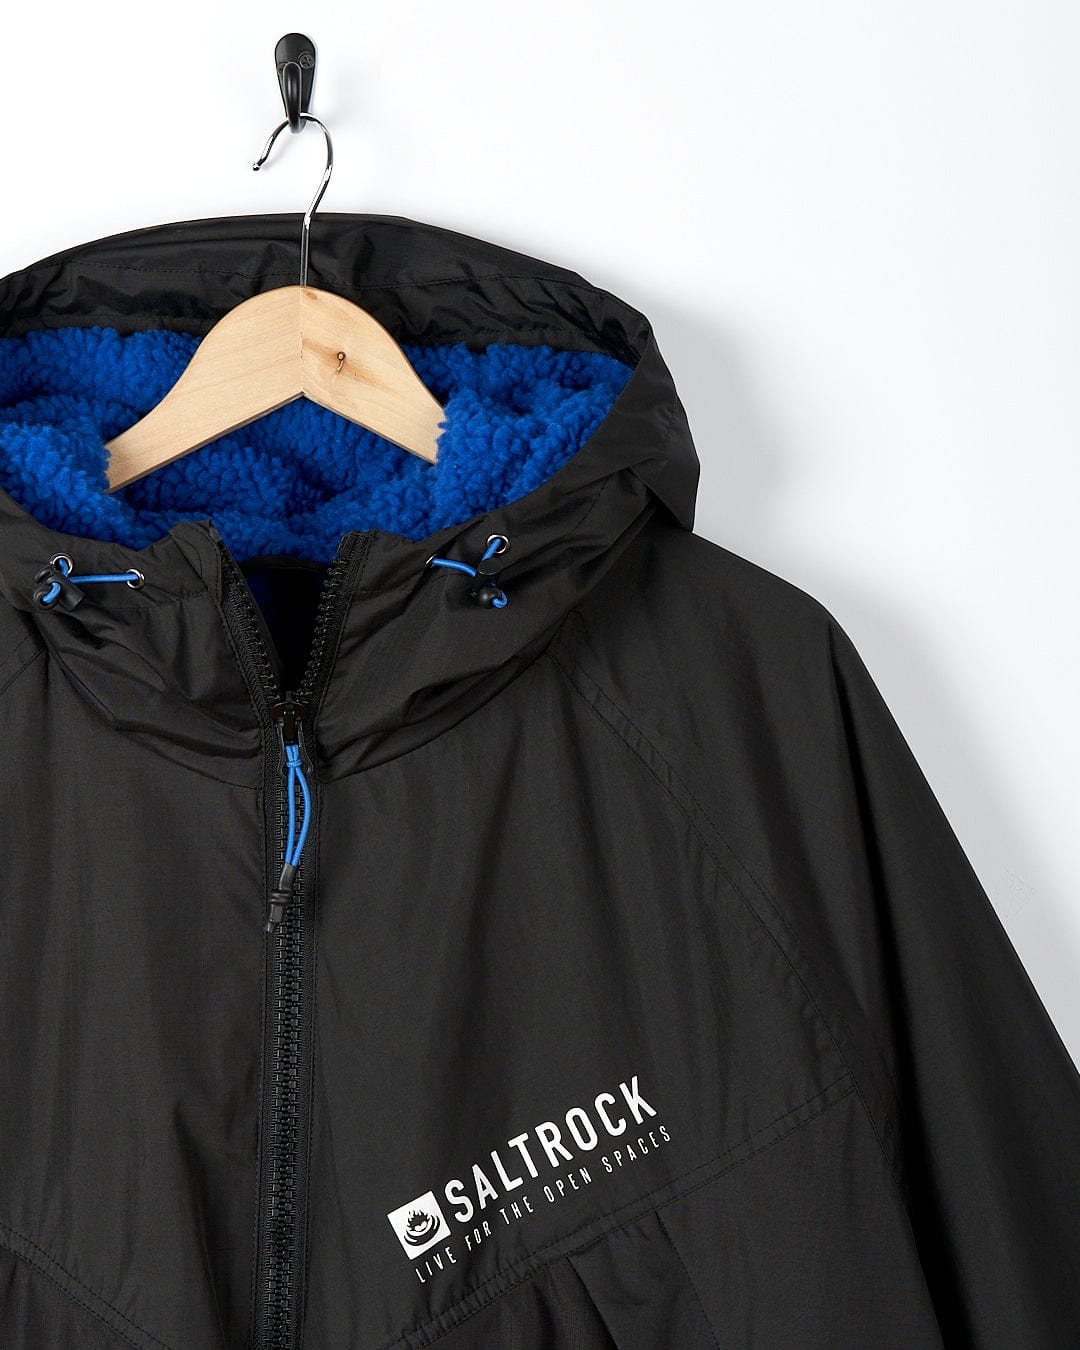 An outdoor Saltrock black jacket with a Four Seasons - Waterproof Changing Robe - Black/Blue hood.